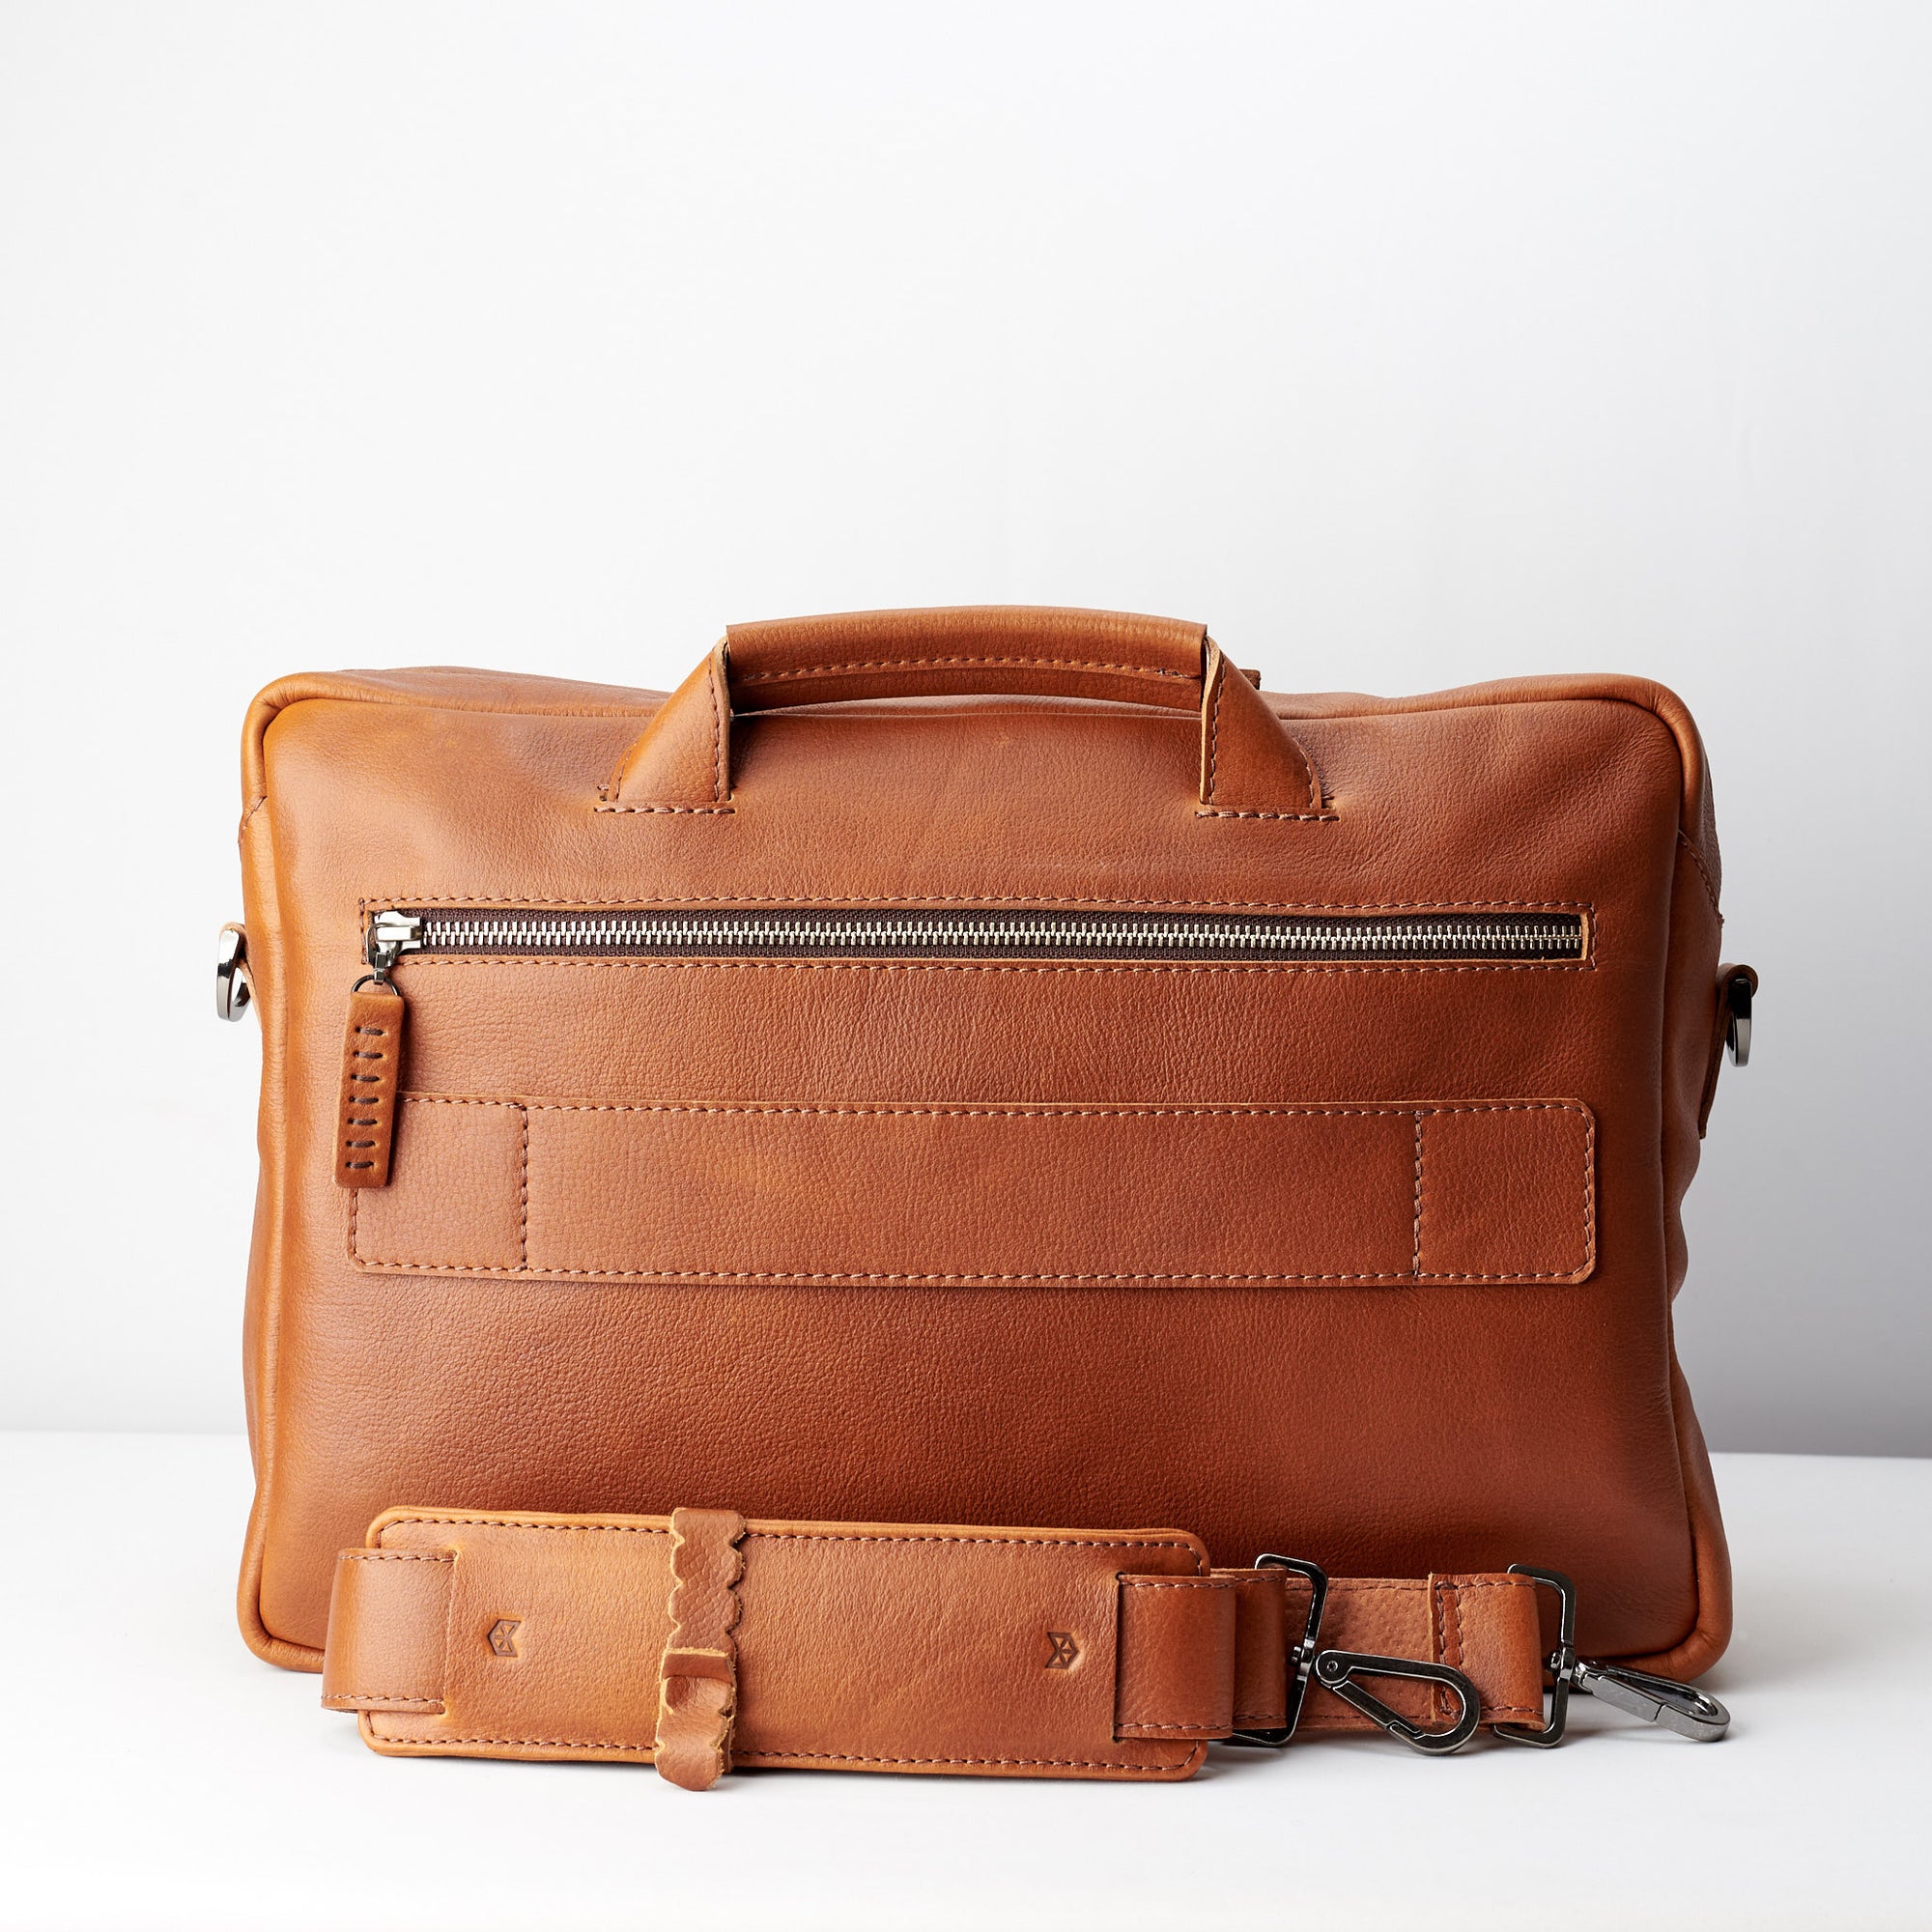 Luggage strap. Tan handmade leather messenger bag for Men by Capra Leather. Tech bag, mens weekender bag 